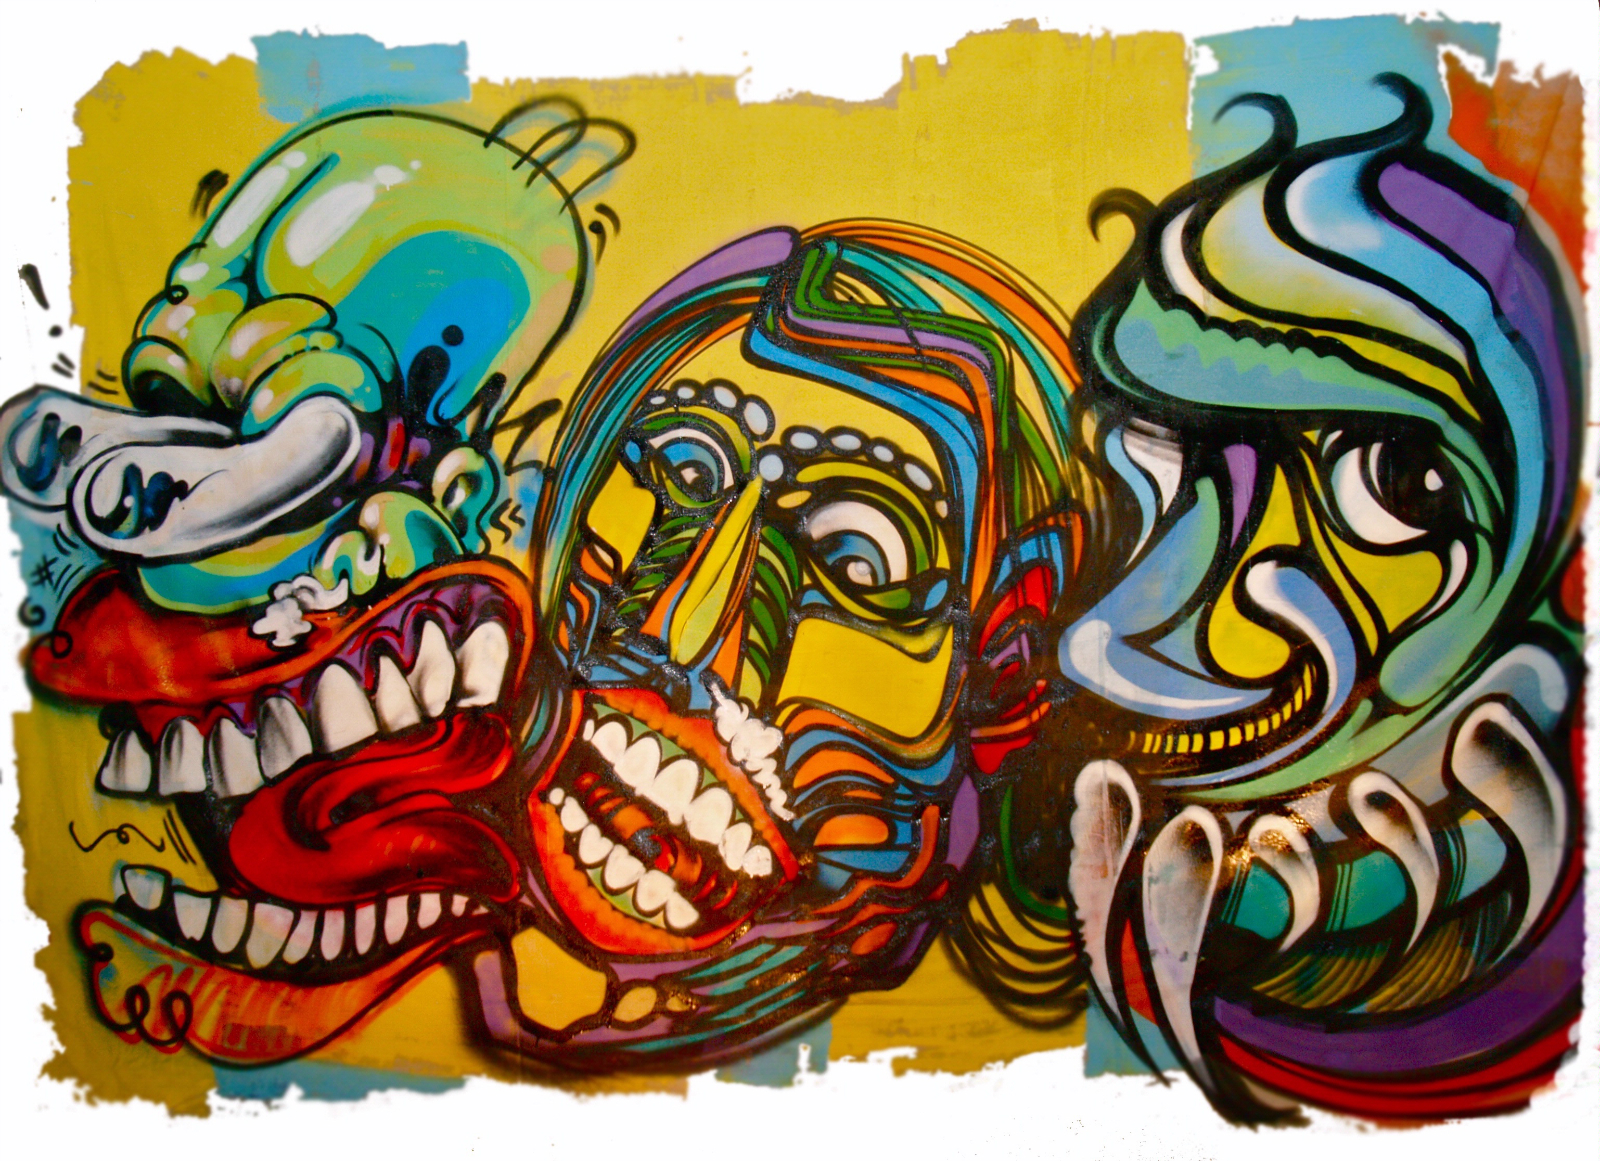 Which Artist Chose Graffiti For Creative Expression